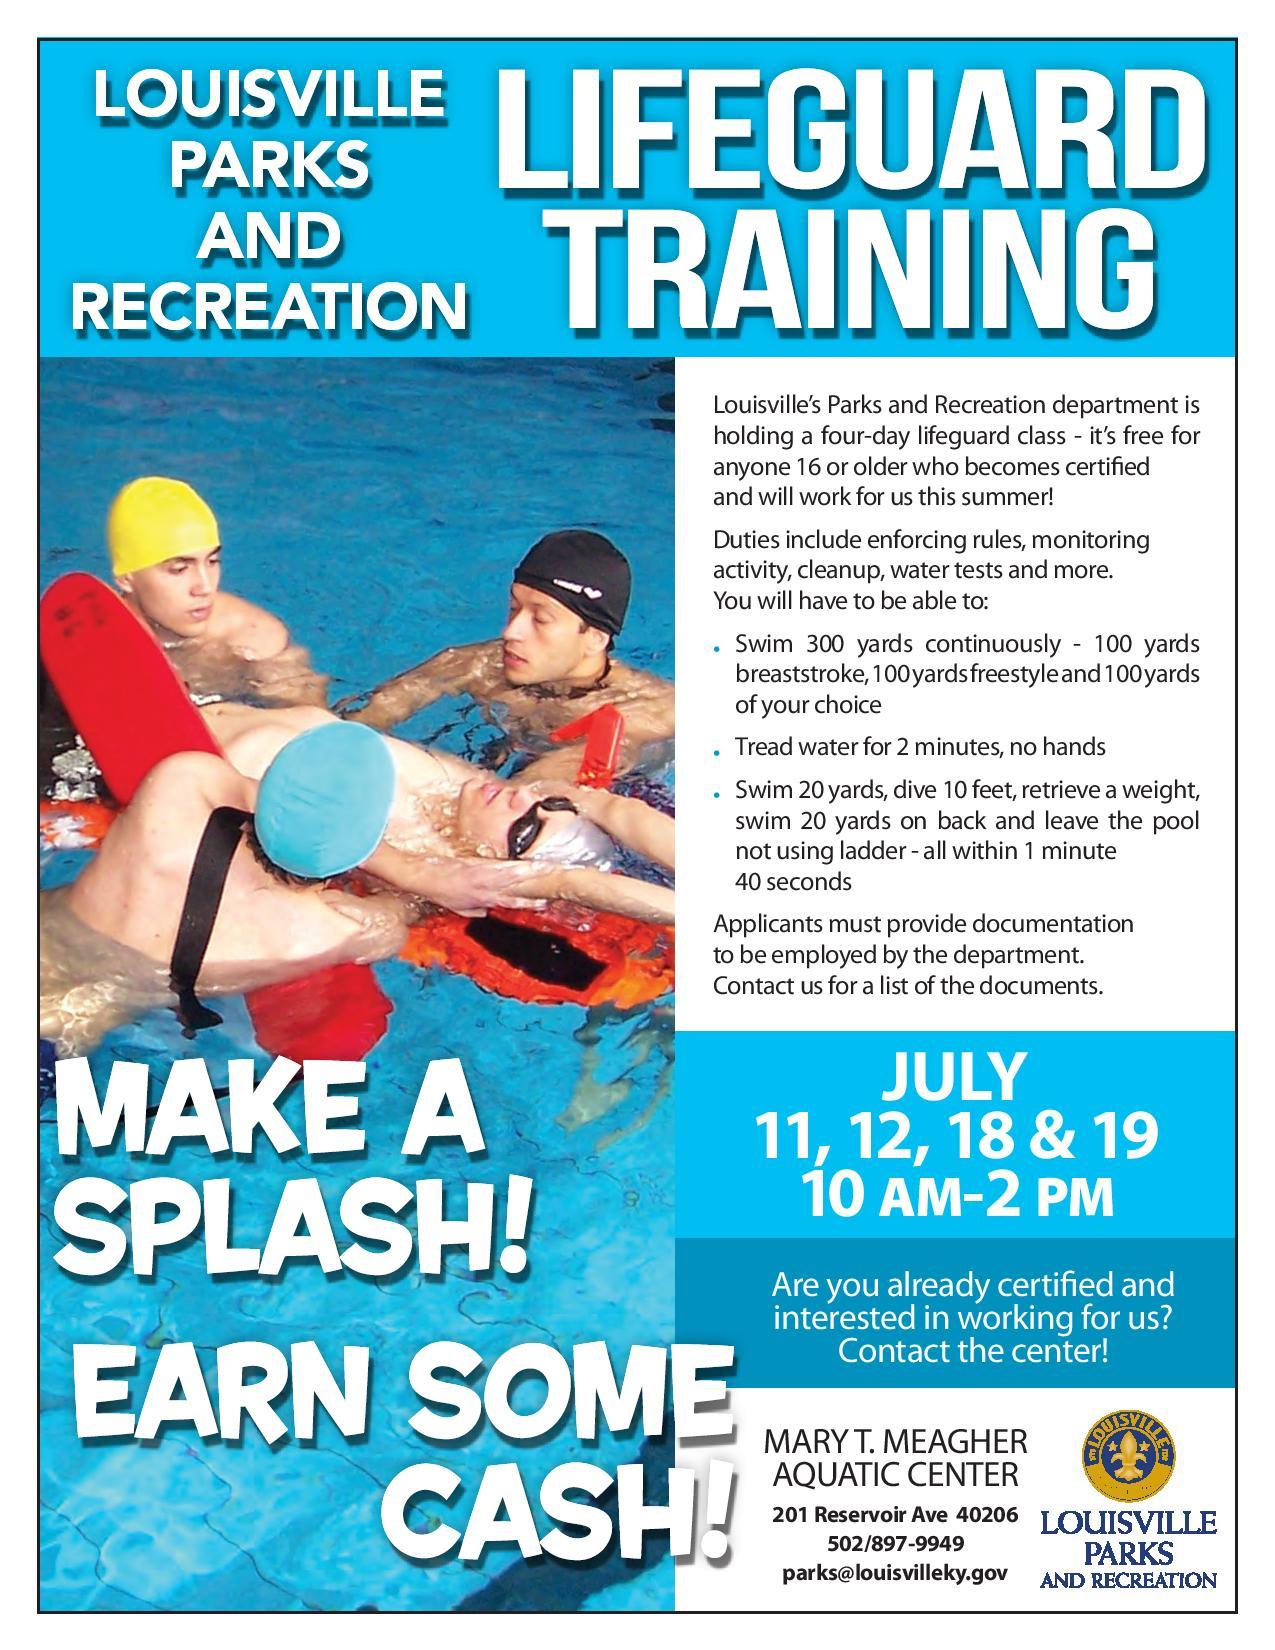 Lifeguard Training flyer 2020